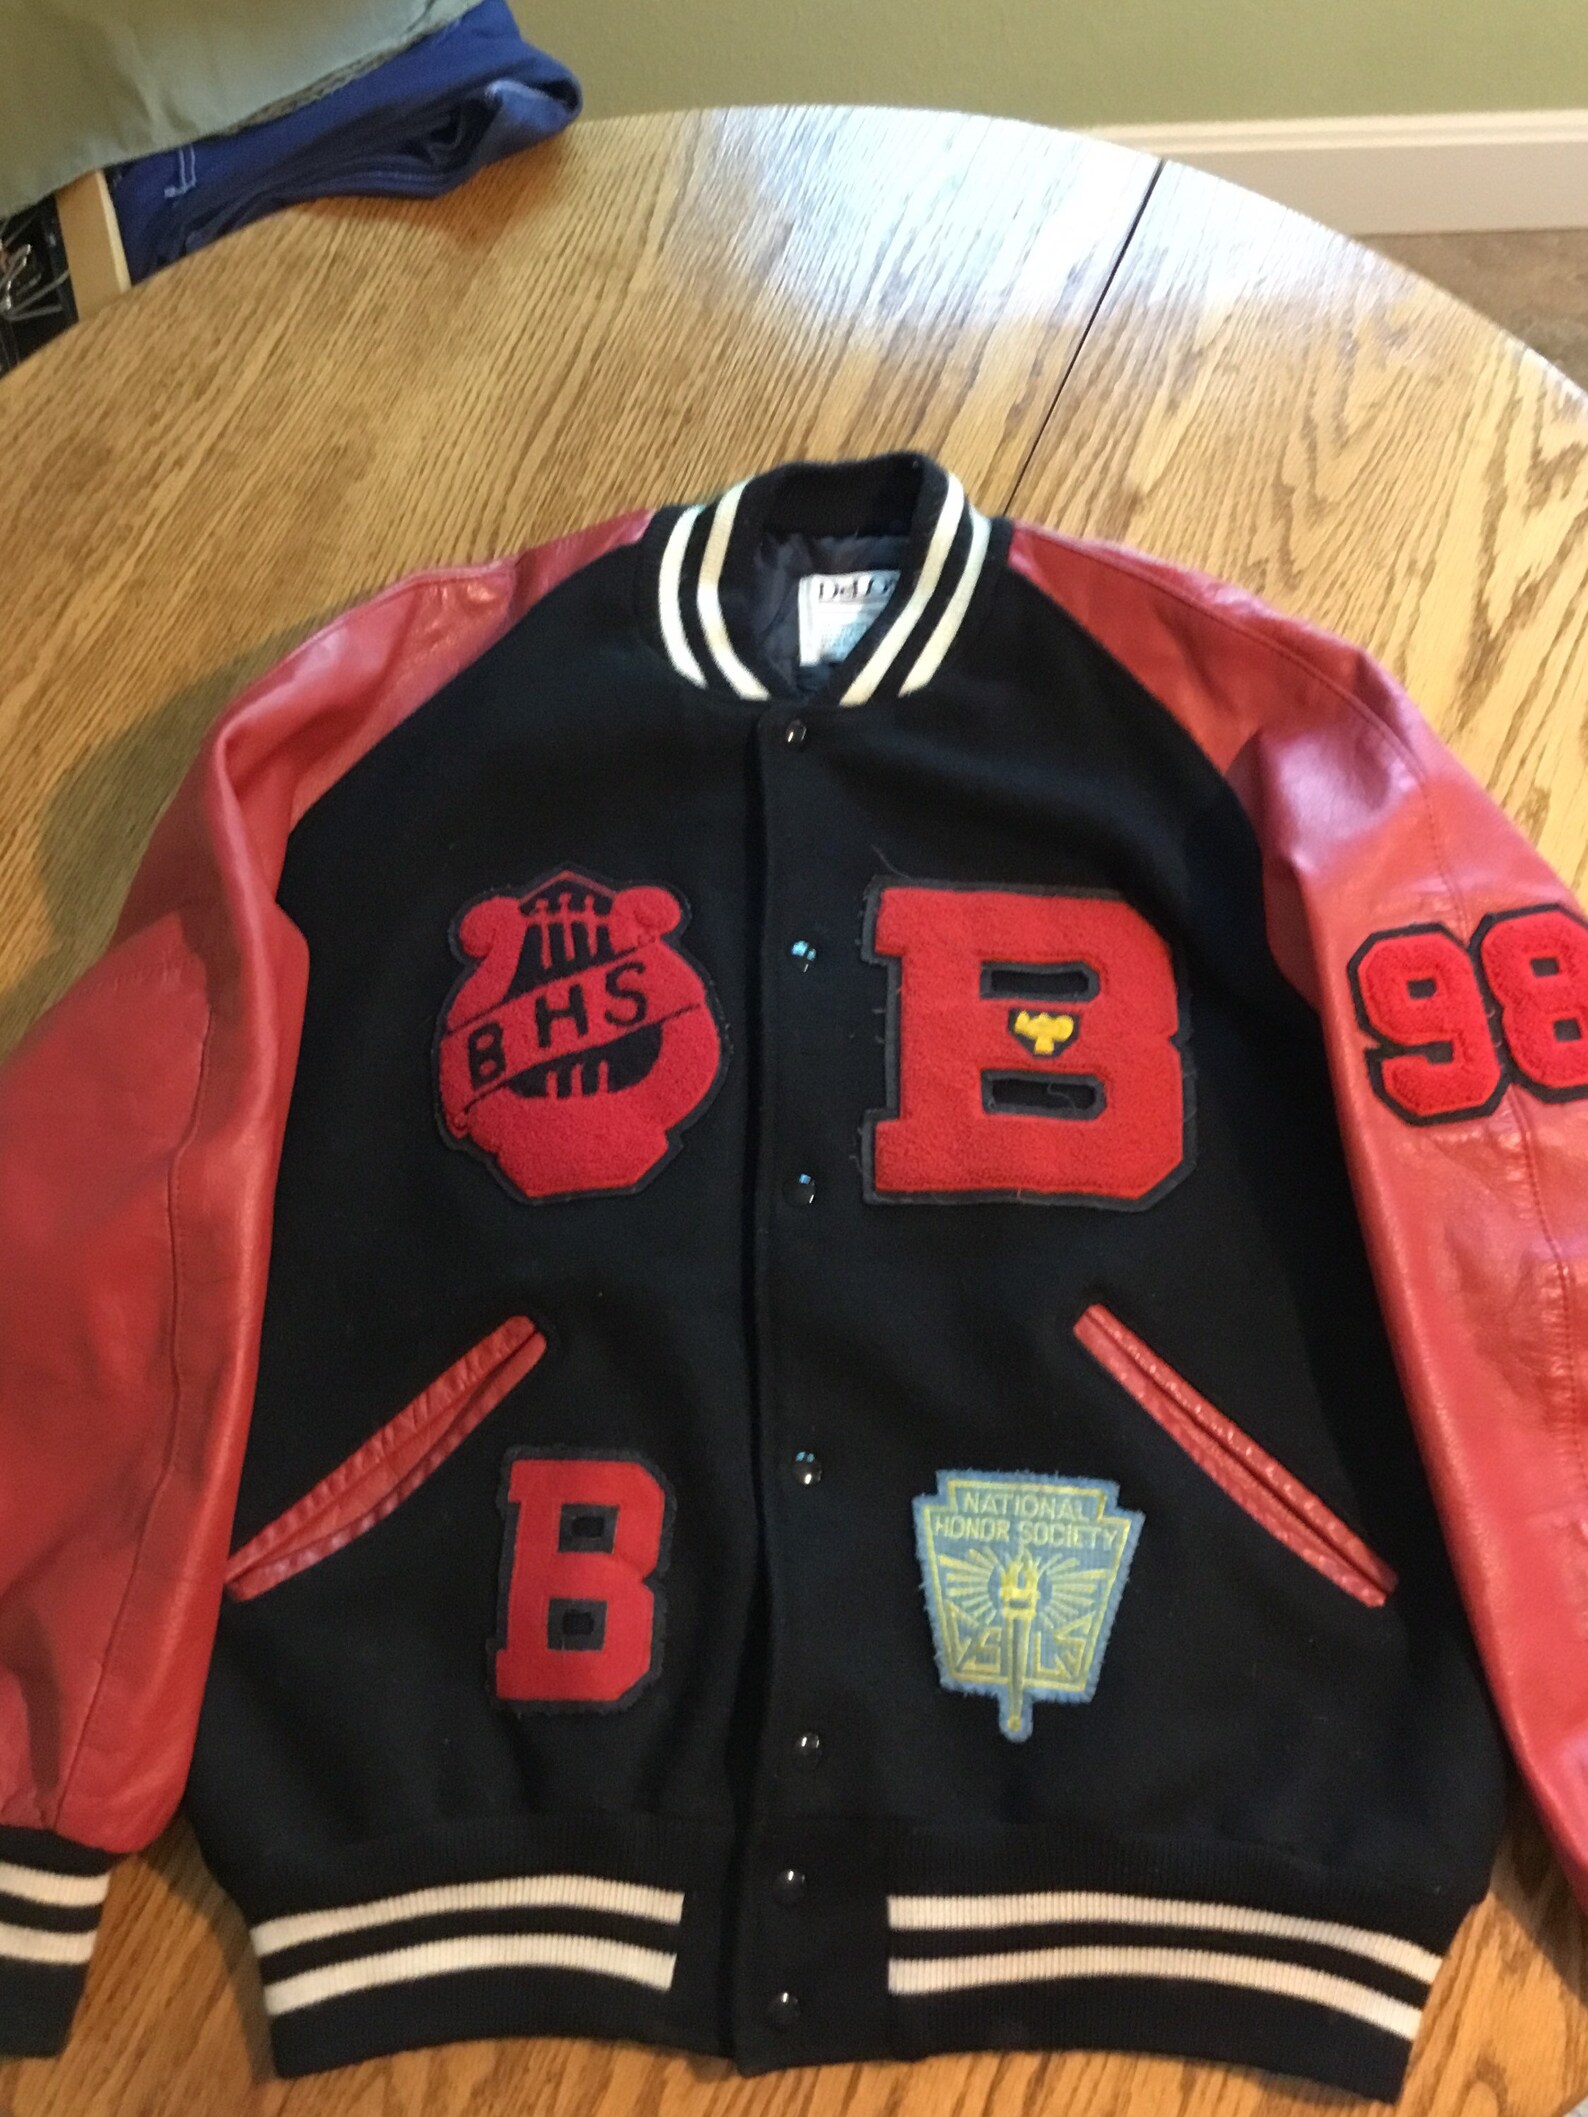 Vintage Black and Red 1990s High School Lettermans Jacket | Etsy